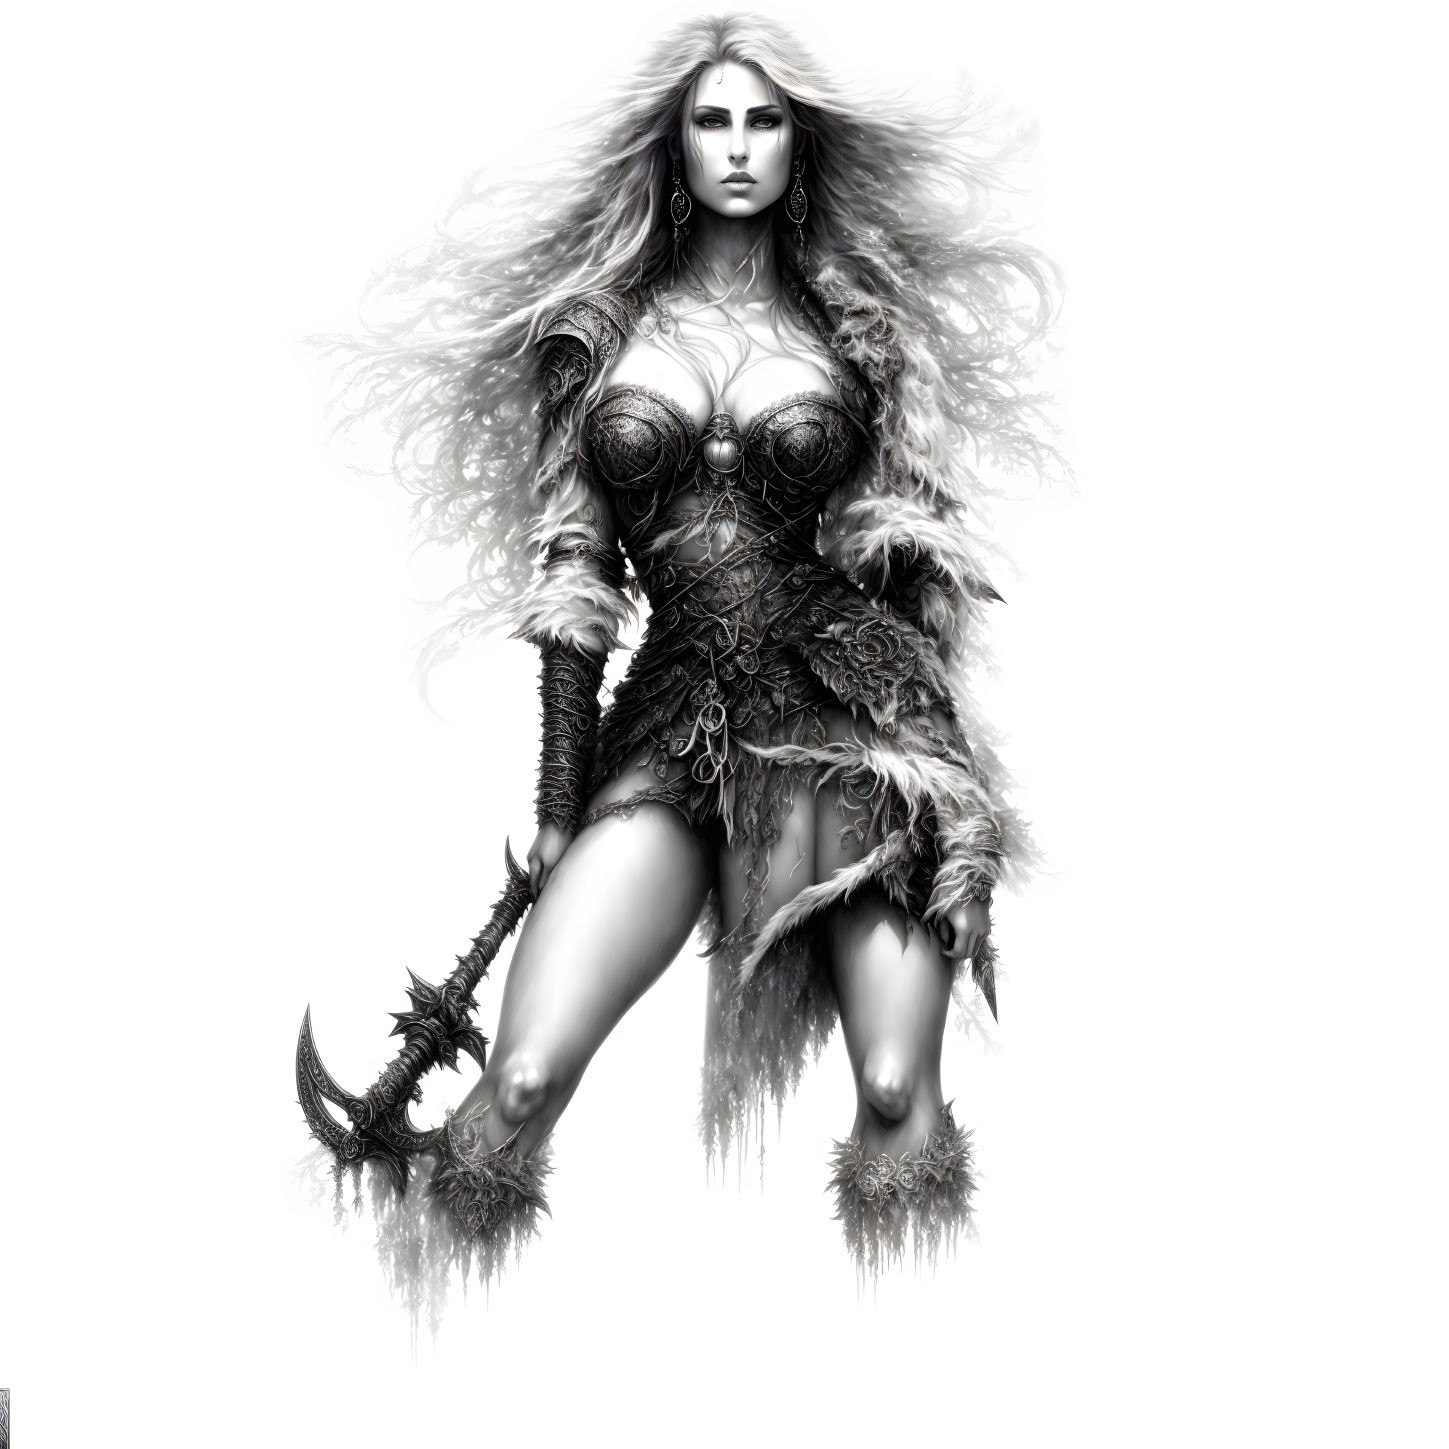 Beautiful warrior woman